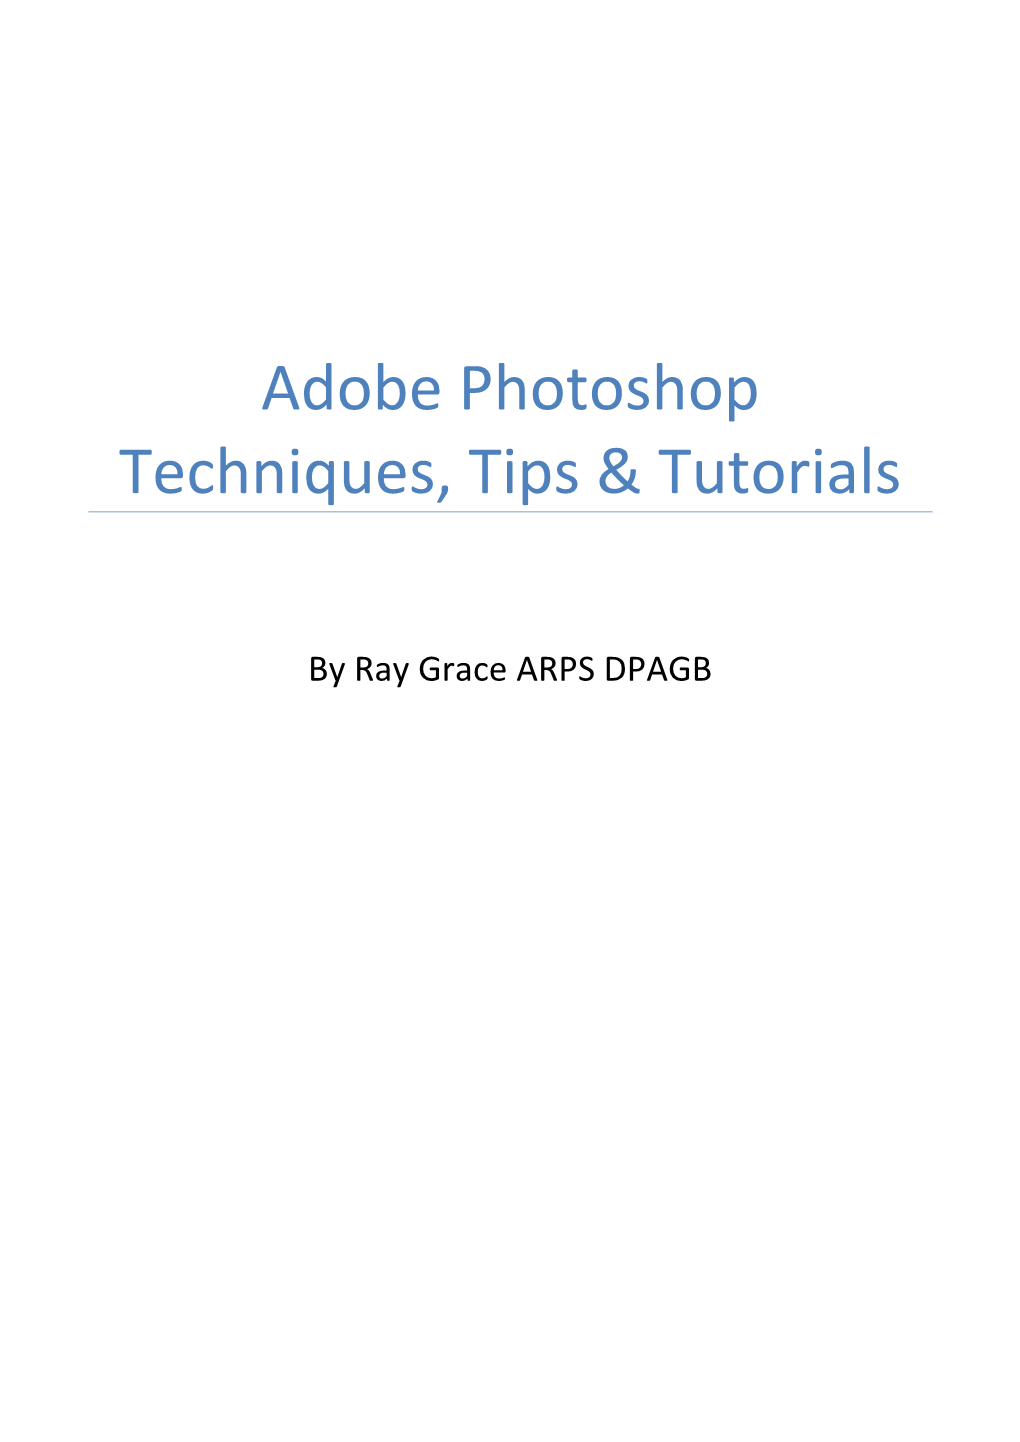 Adobe Photoshop Techniques, Tips & Tutorials